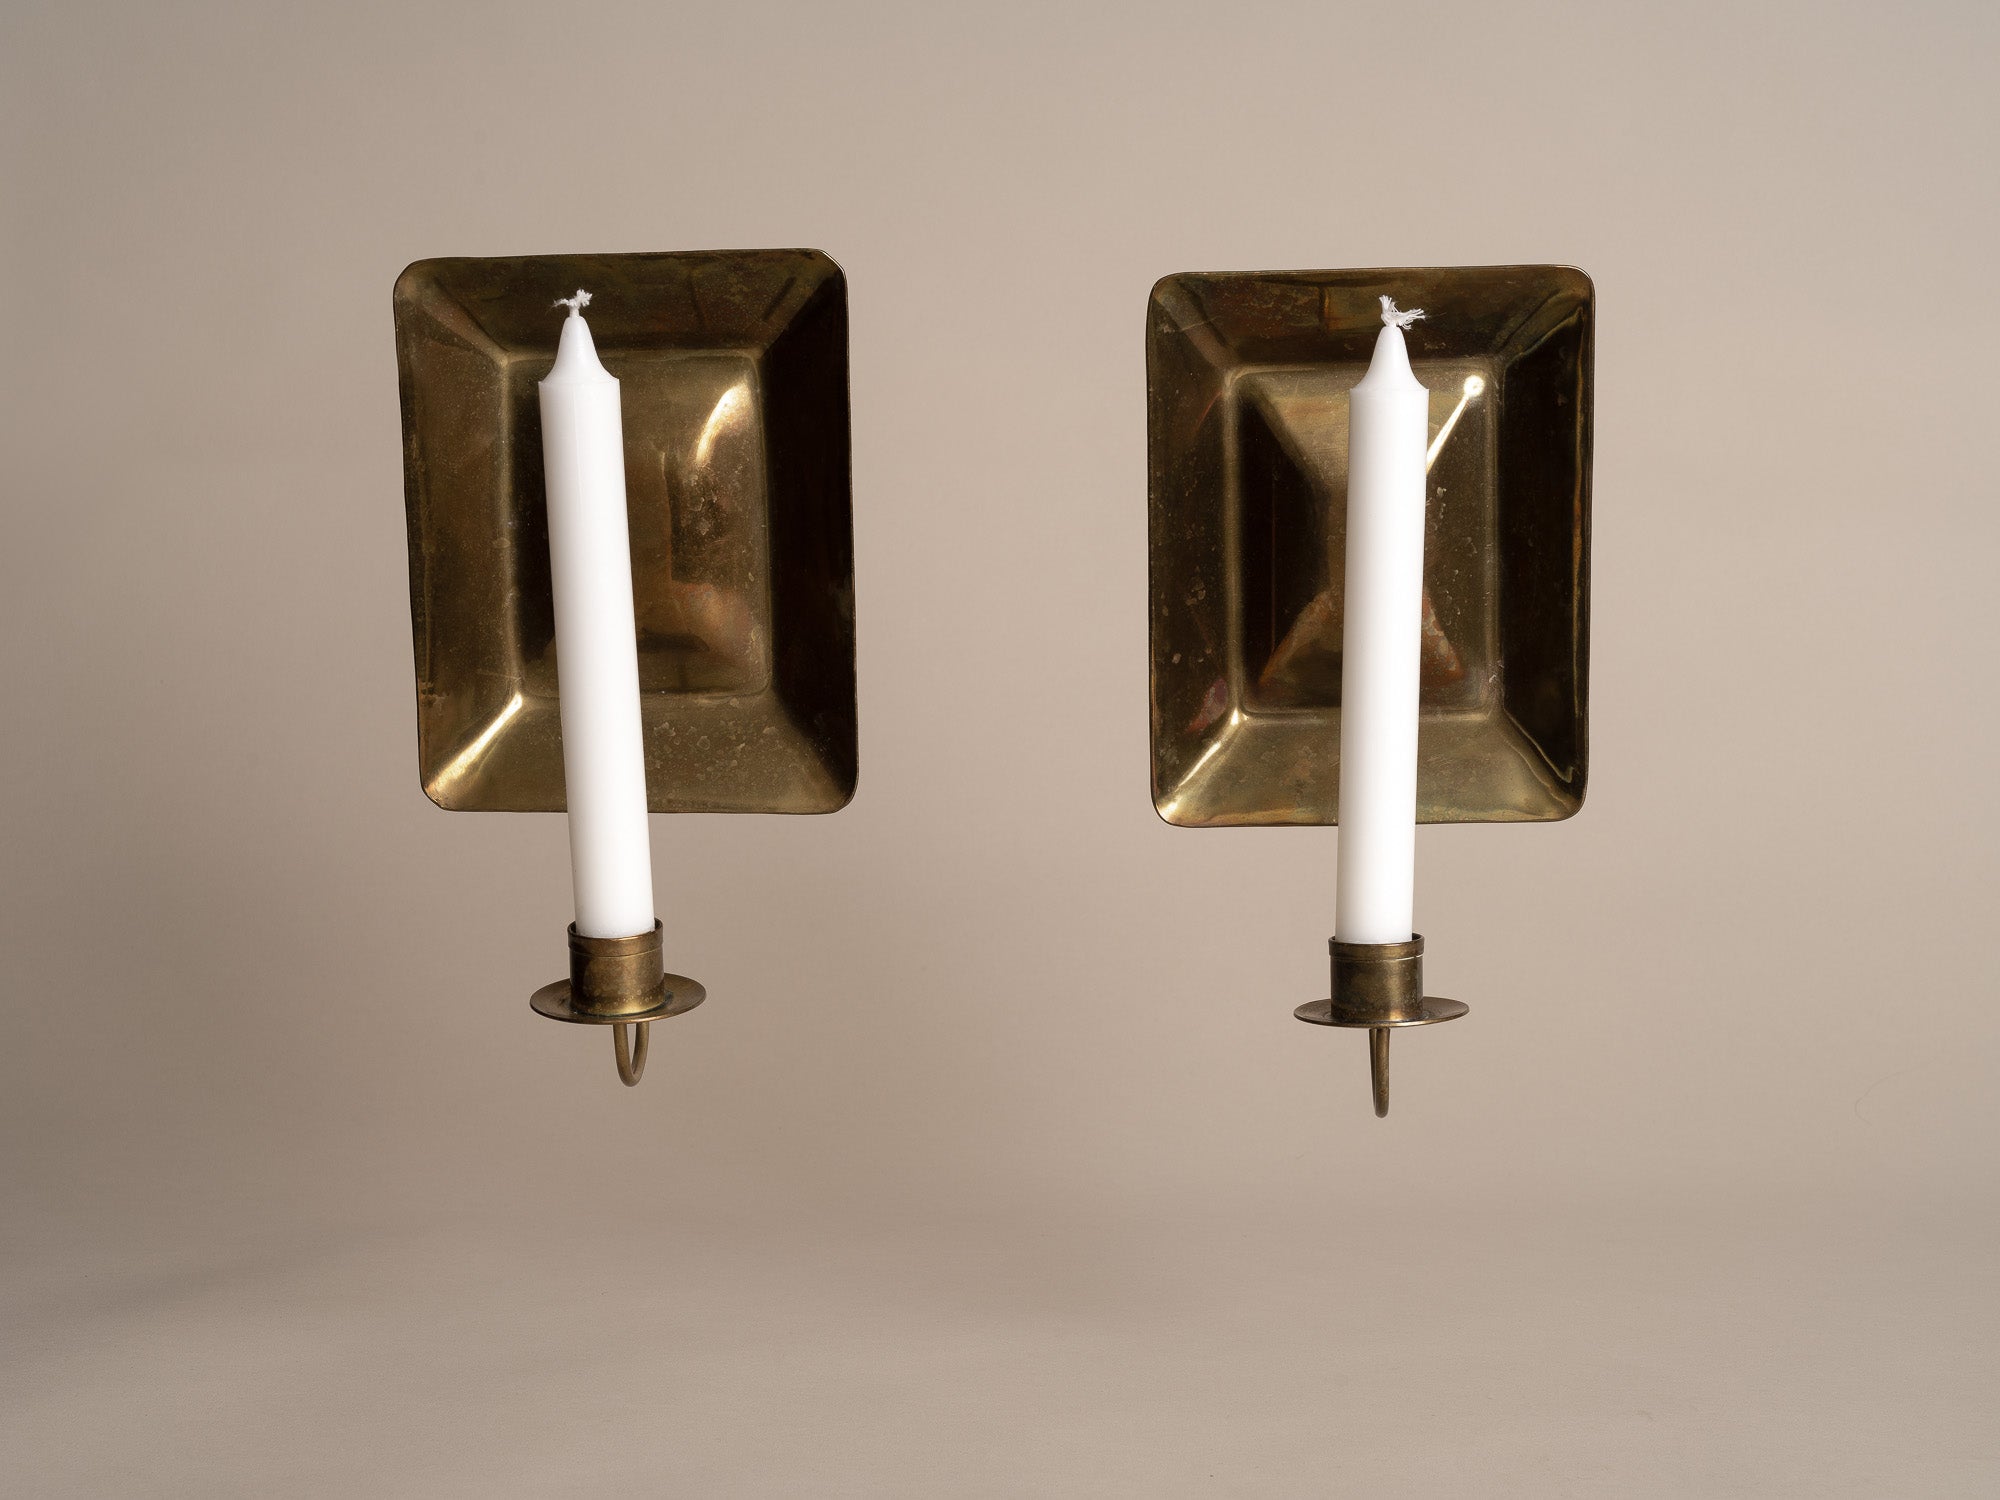 Paire de miroirs d’applique gustaviens en laiton, Suède (vers 1900)..Pair of gustavian folk brass wall hanging candle holders, Sweden (circa 1900)